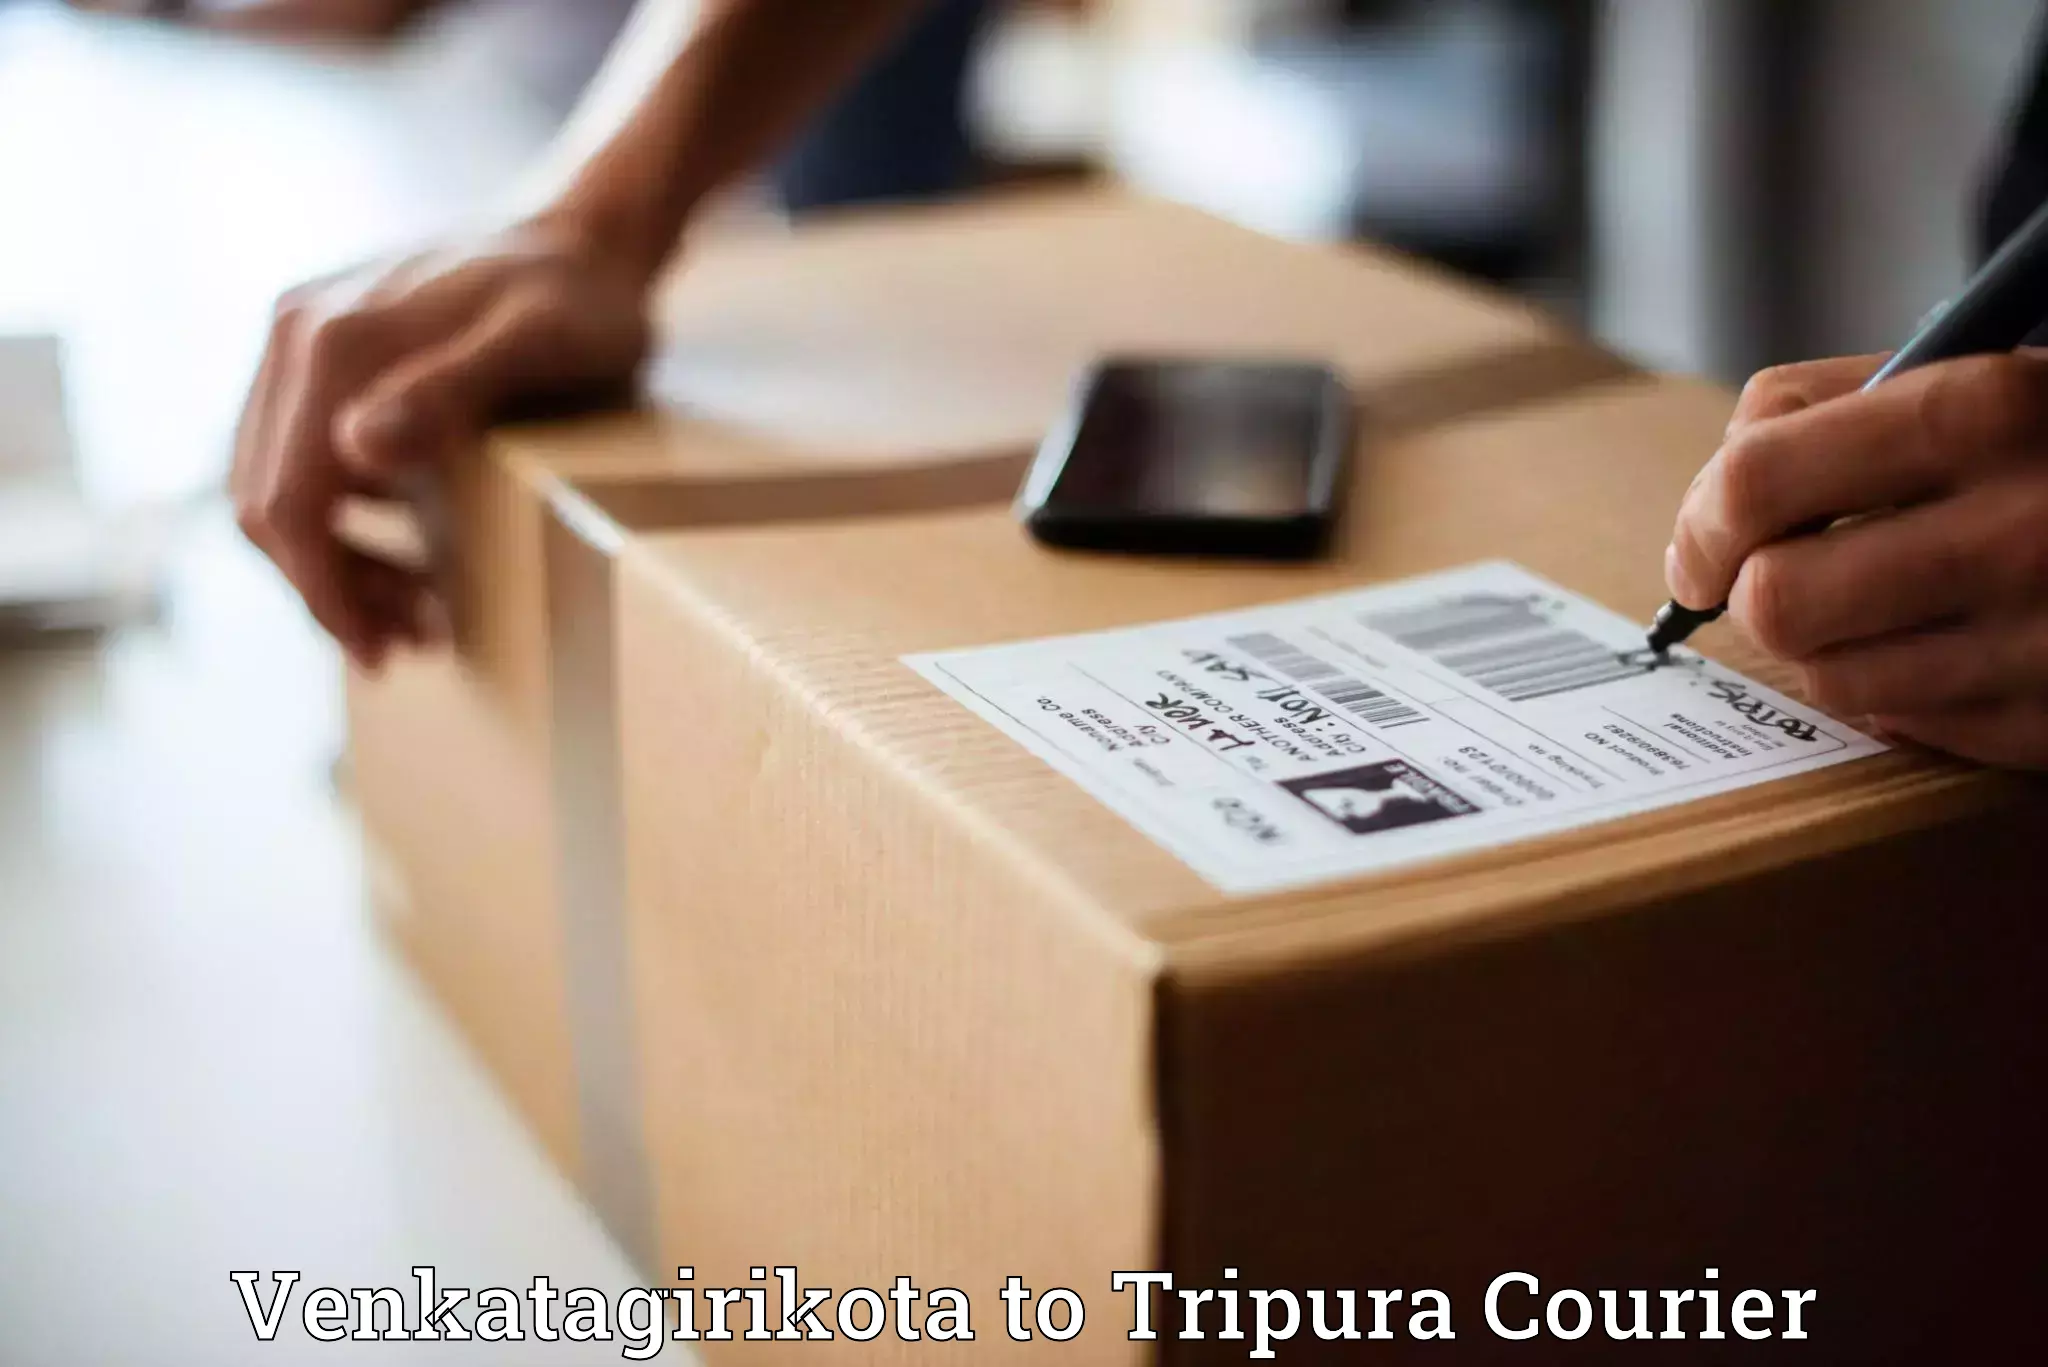 Digital courier platforms Venkatagirikota to Udaipur Tripura